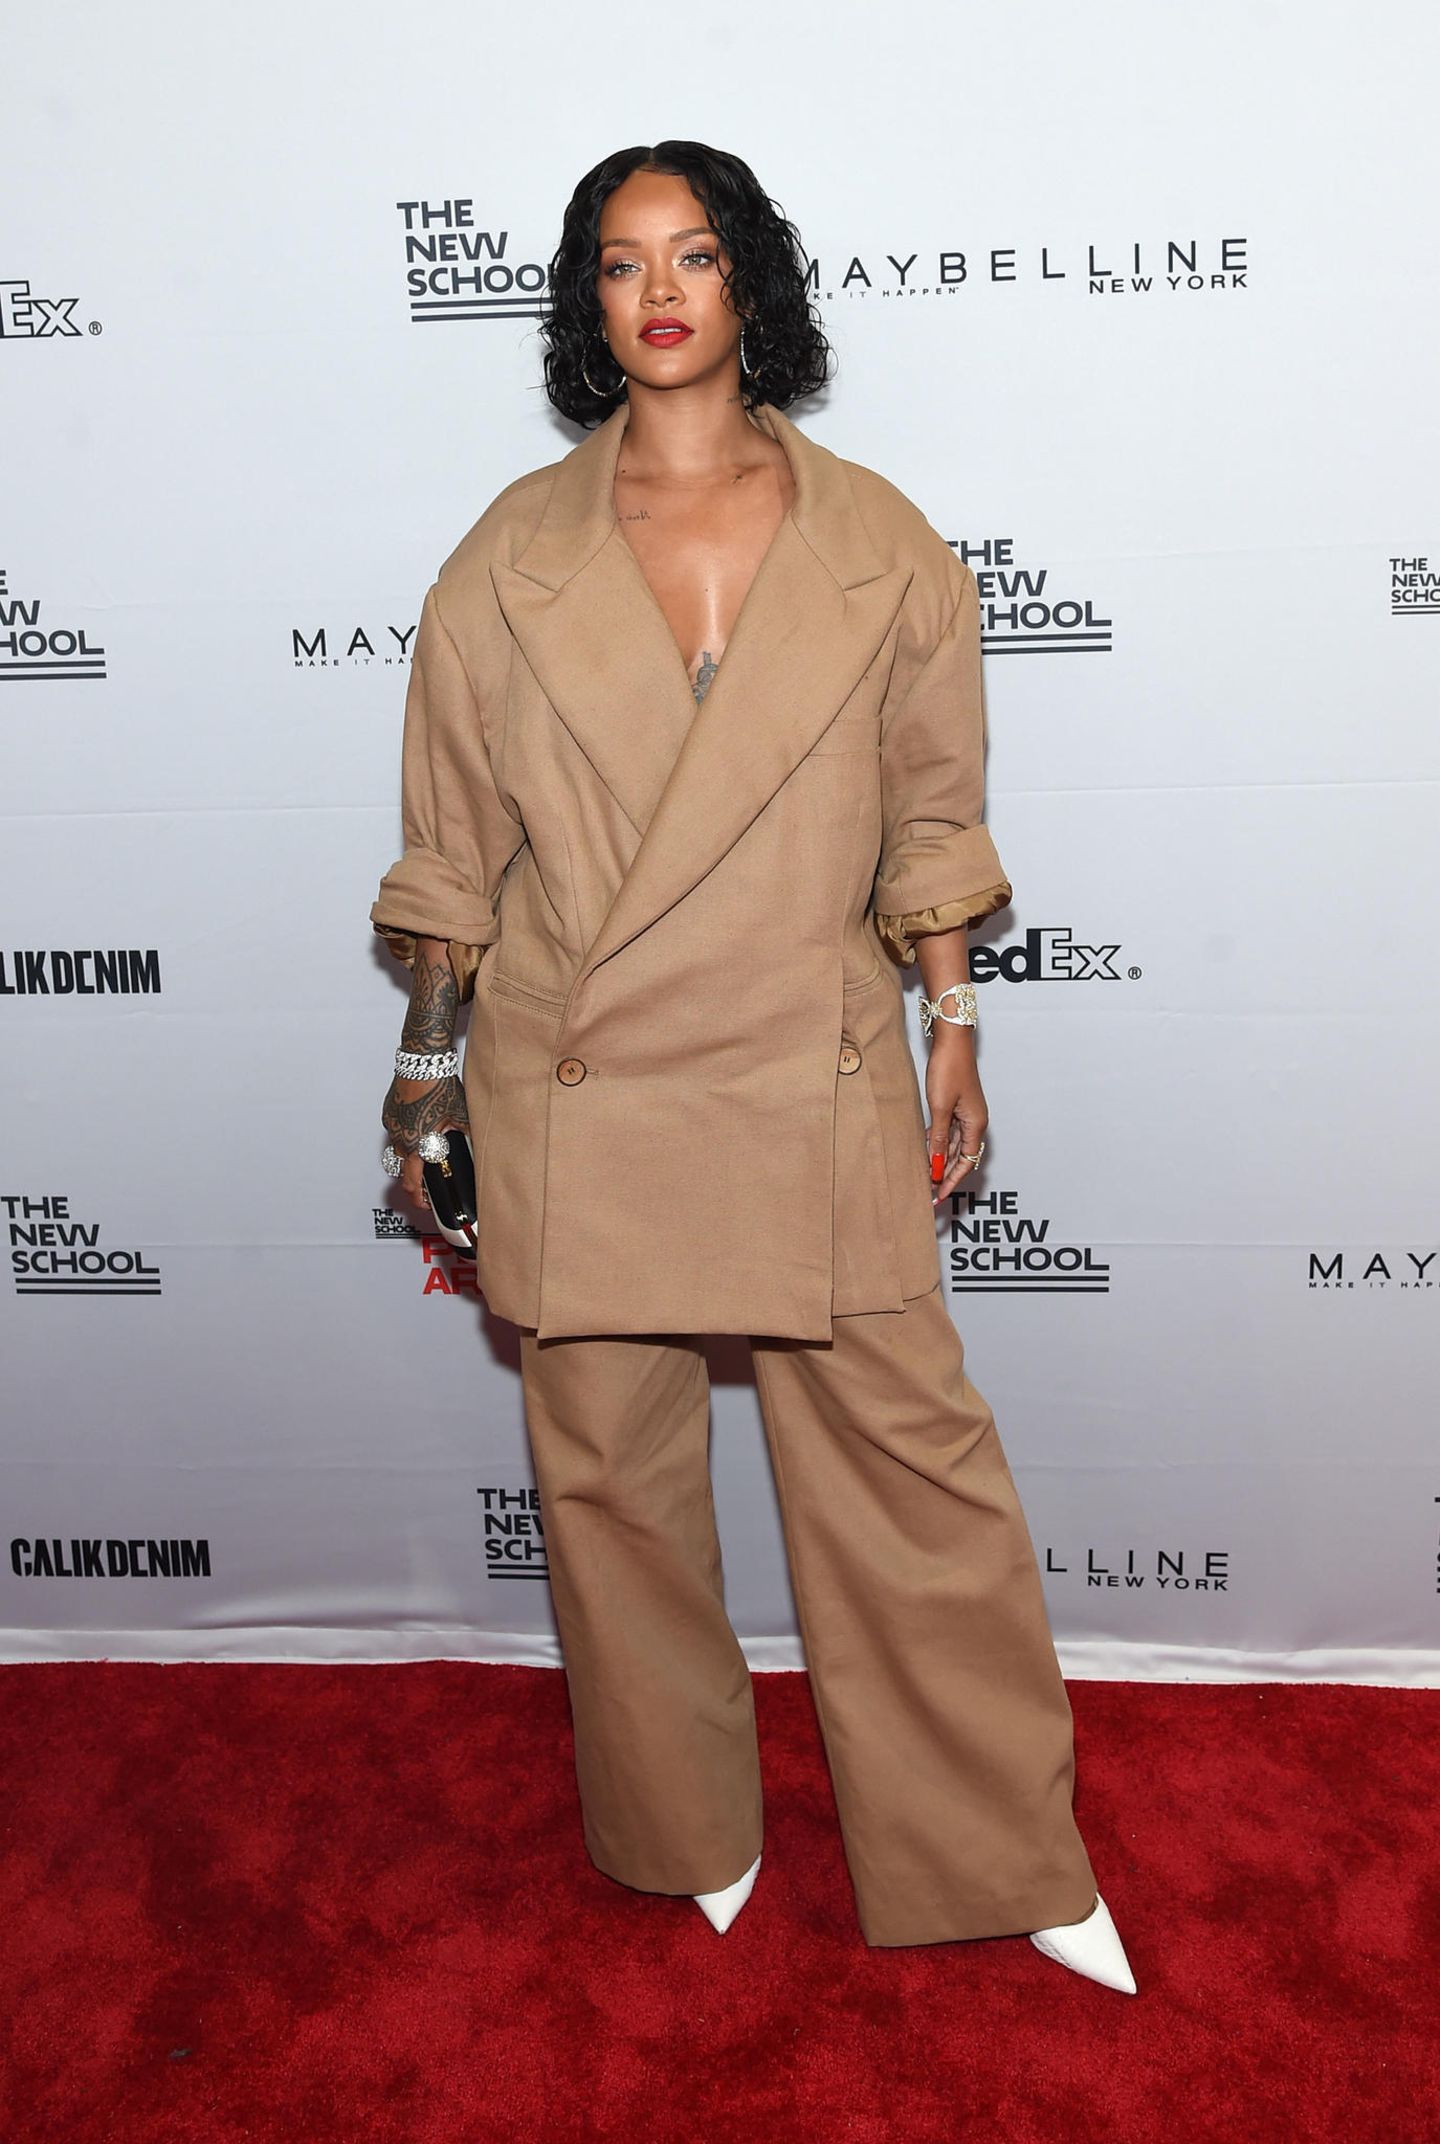 Modepannen der Stars: Rihanna im Anzug